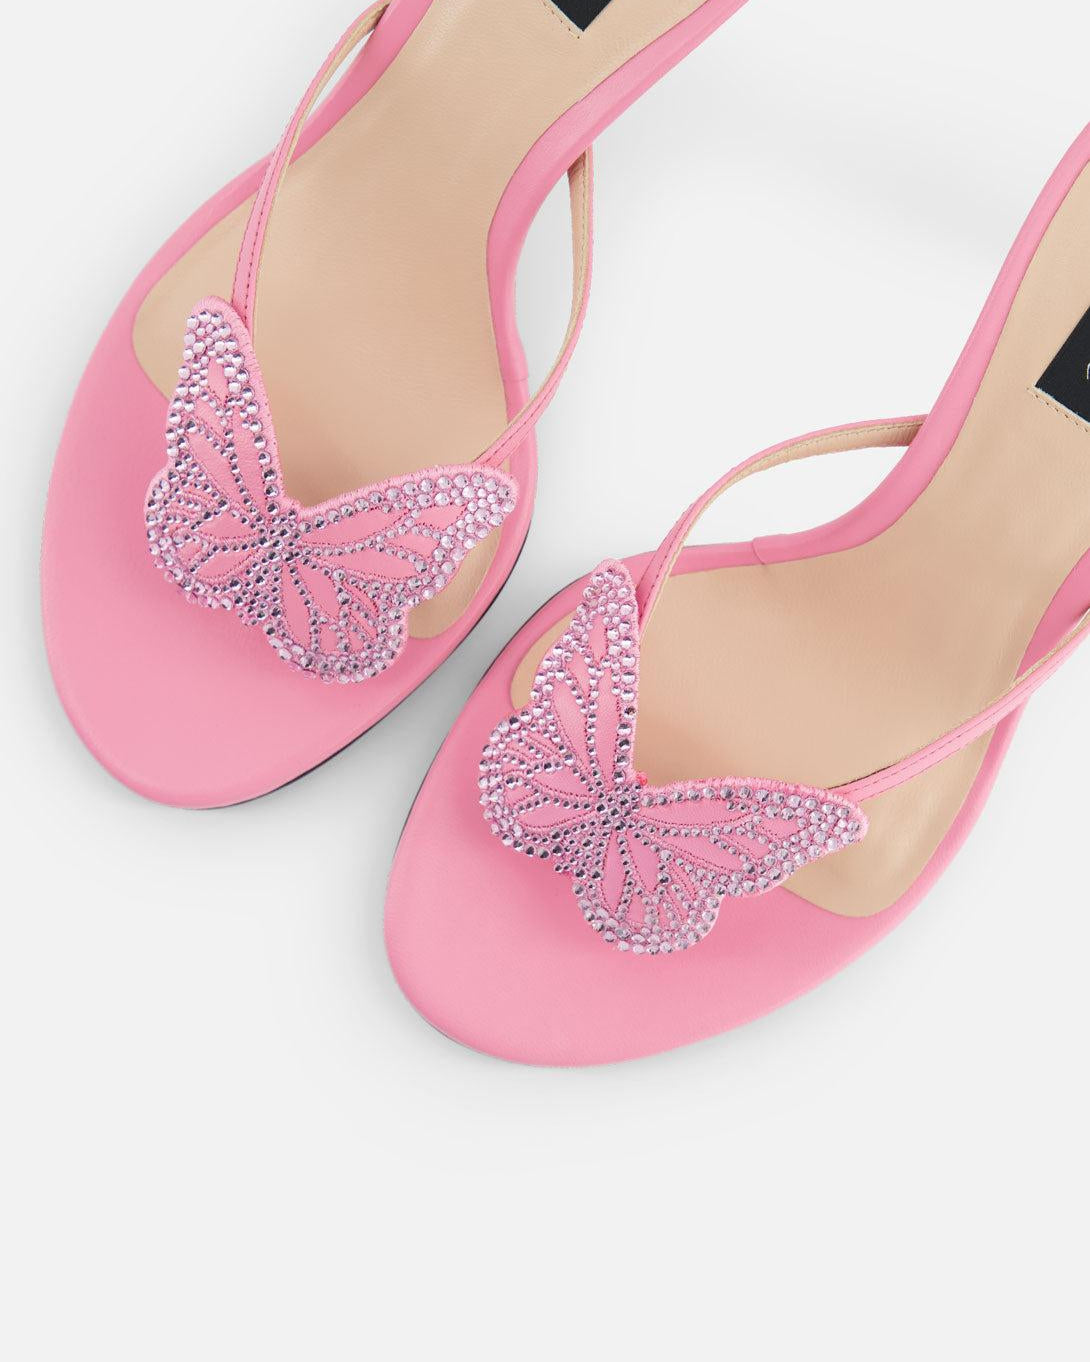 Butterfly Sandals - Pink - Shoes - Blumarine - Elevastor